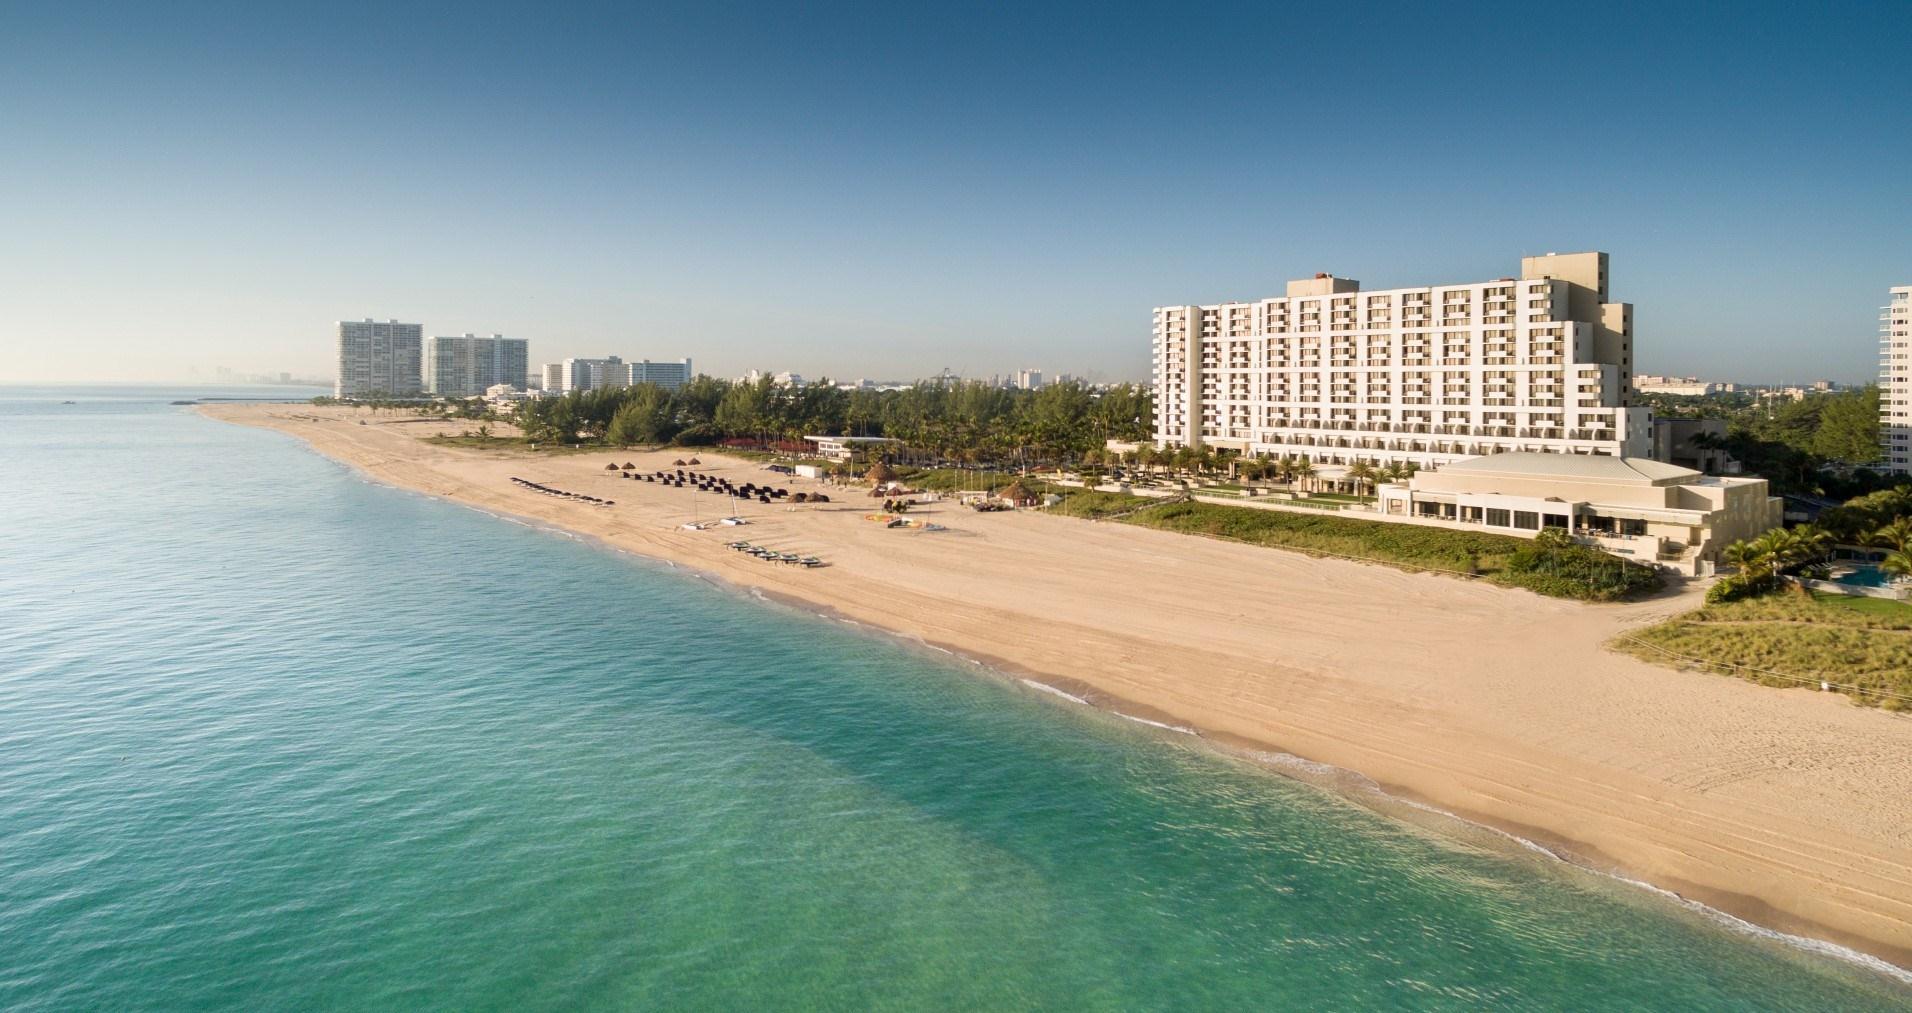 Fort Lauderdale Marriott Harbor Beach Resort & Spa in Fort Lauderdale, FL